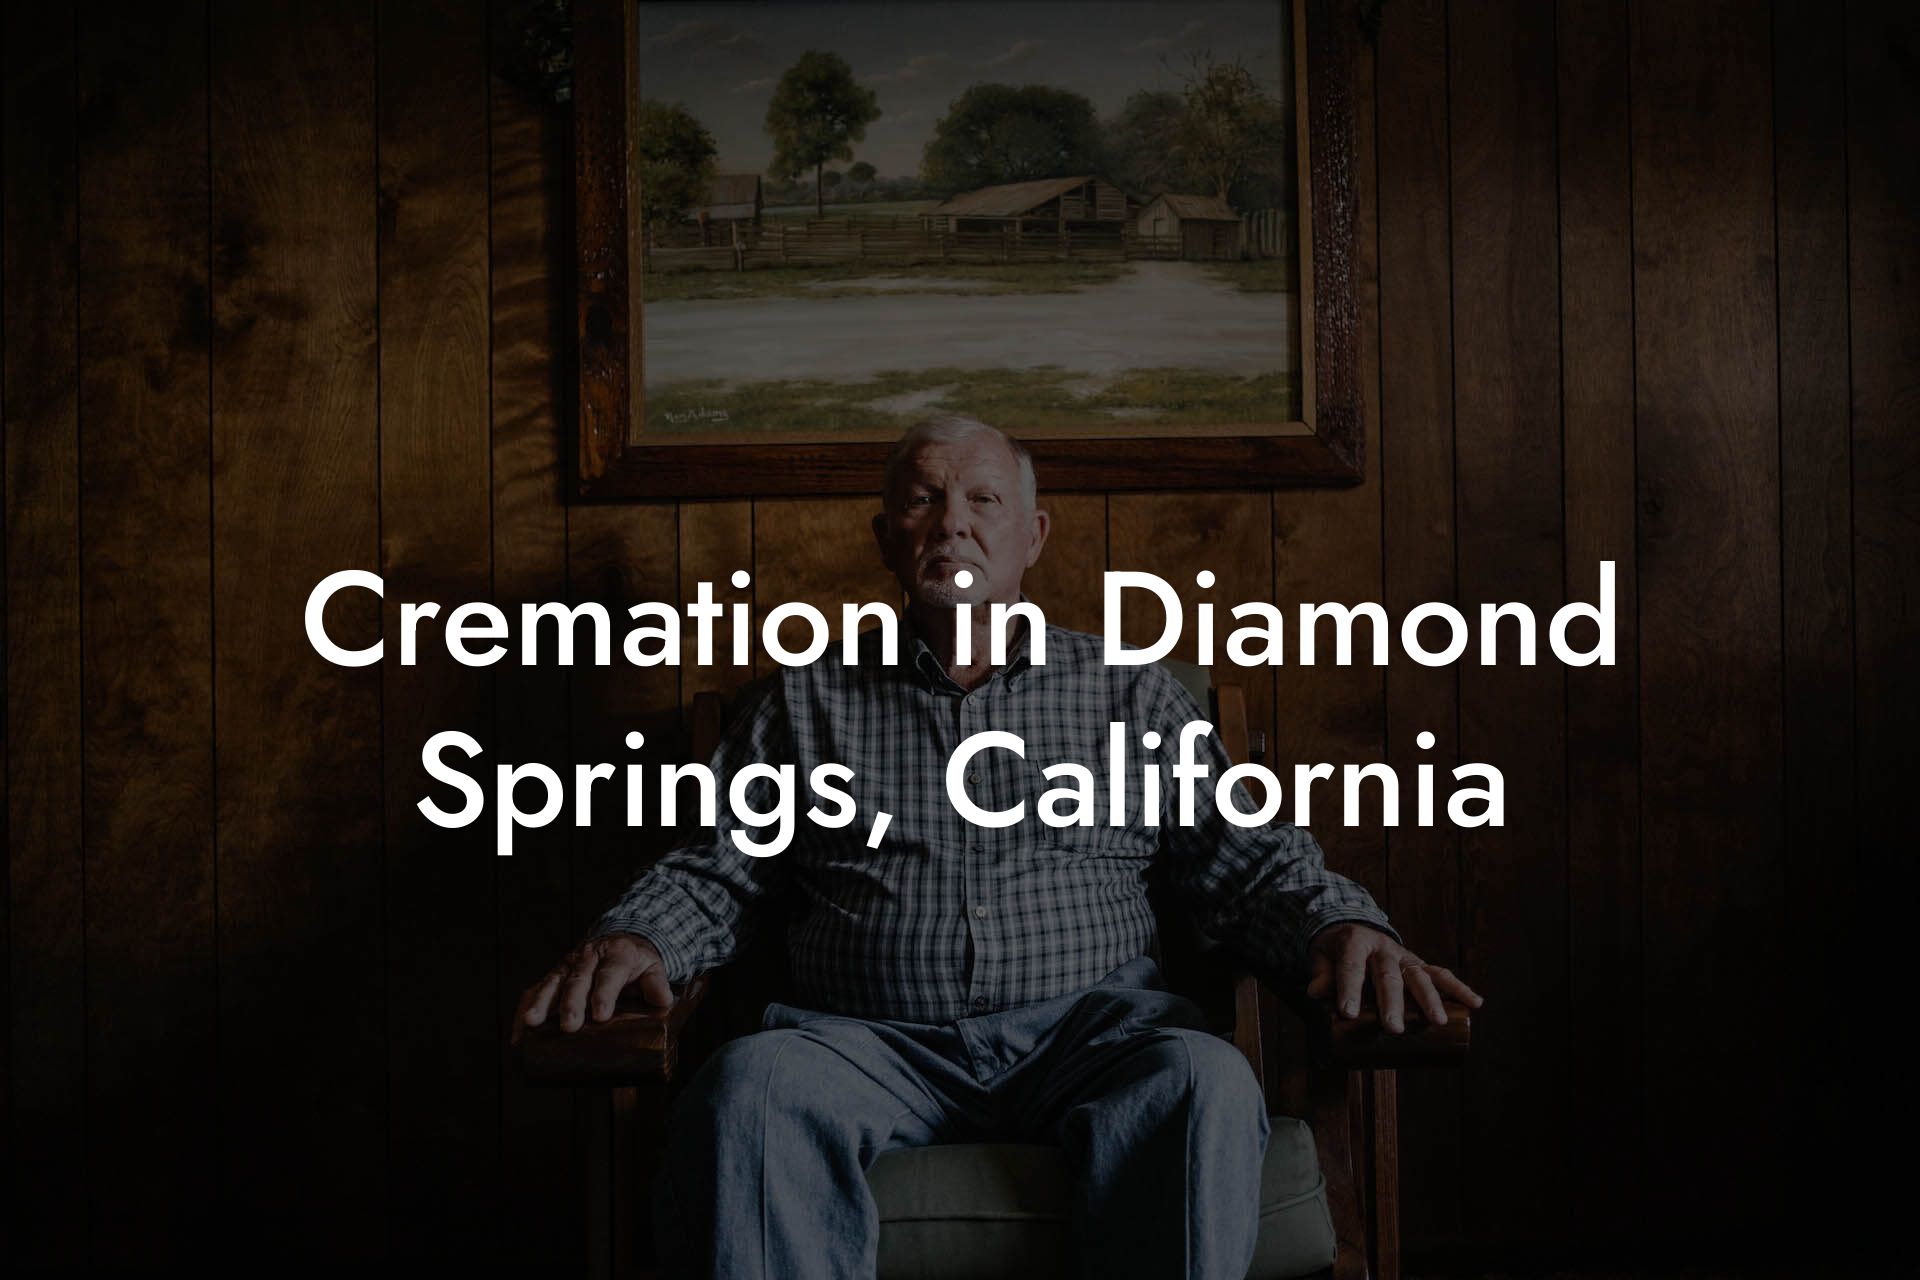 Cremation in Diamond Springs, California